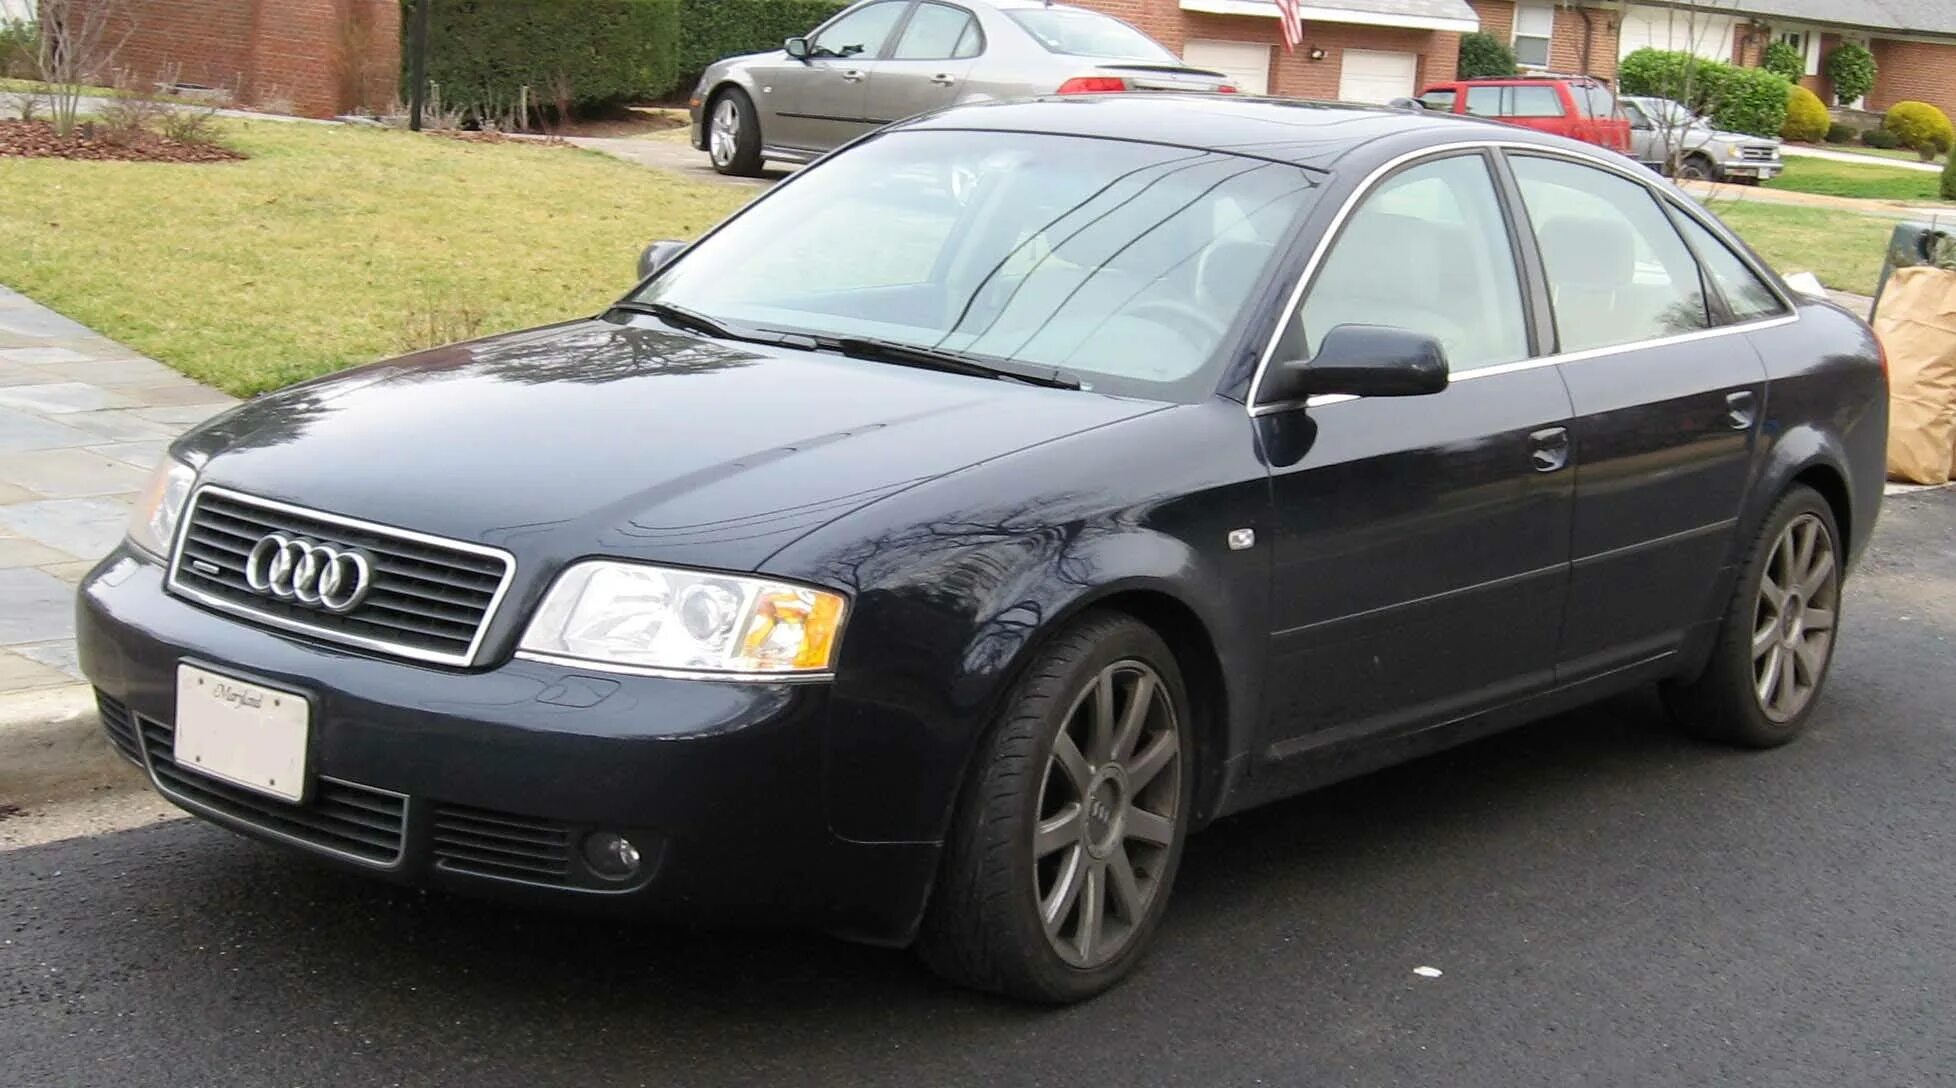 Ауди а6 с5 2001 год. Audi a6 c5 1999. Audi a6 [c5] 1997-2004. Audi a6 c5 1997. Audi a6 c5 2004.